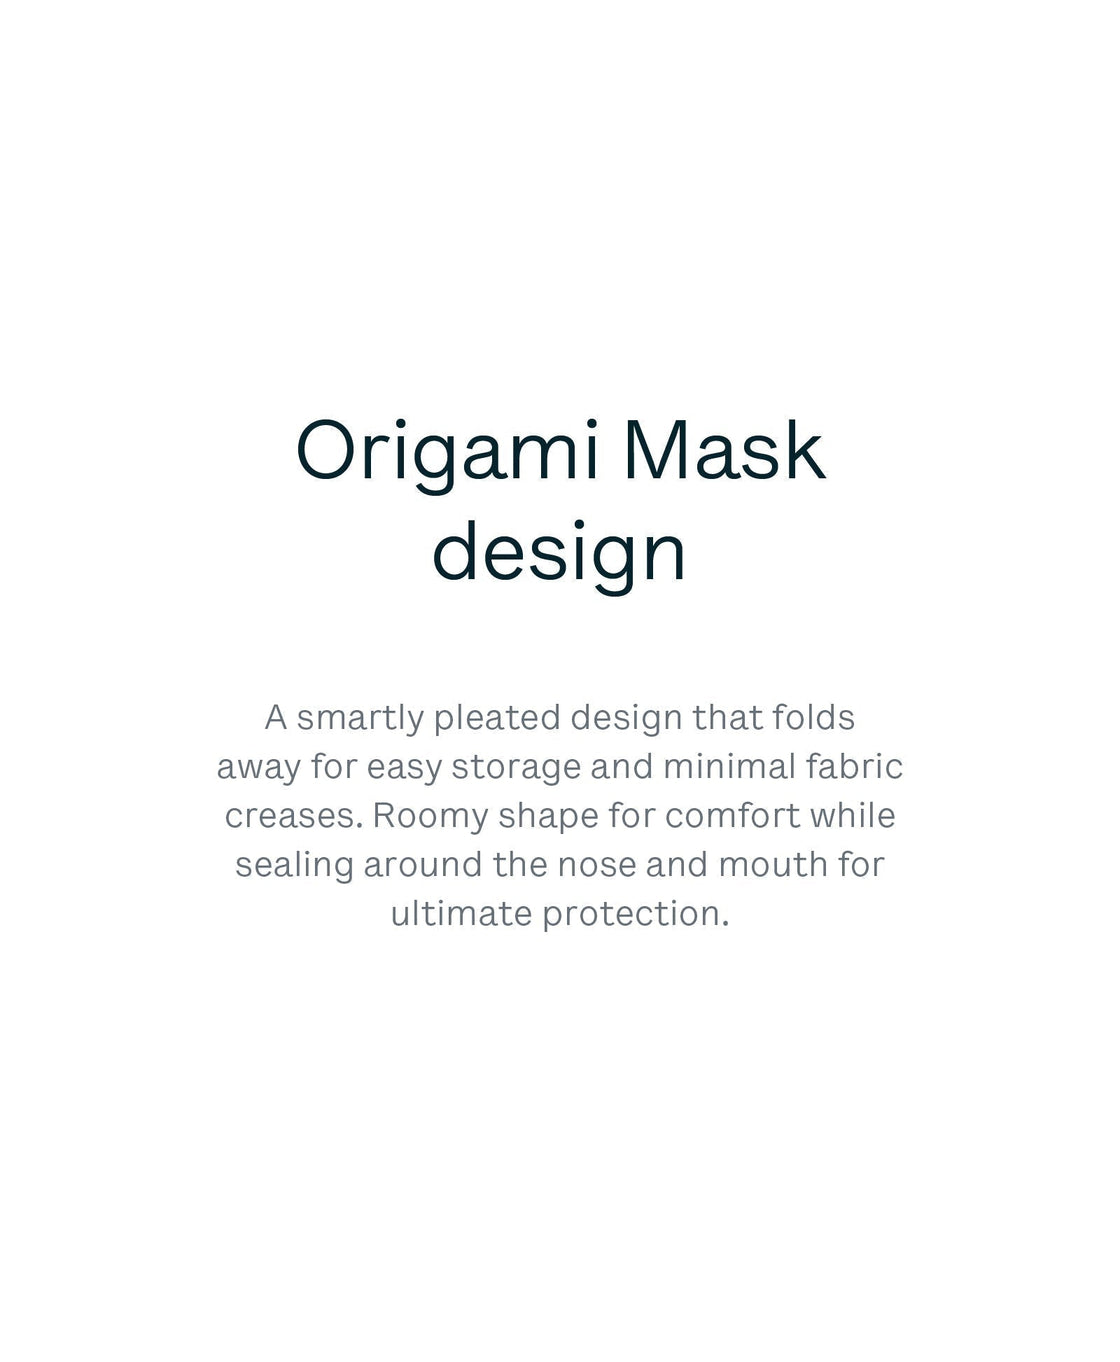 3 Printed Origami Masks